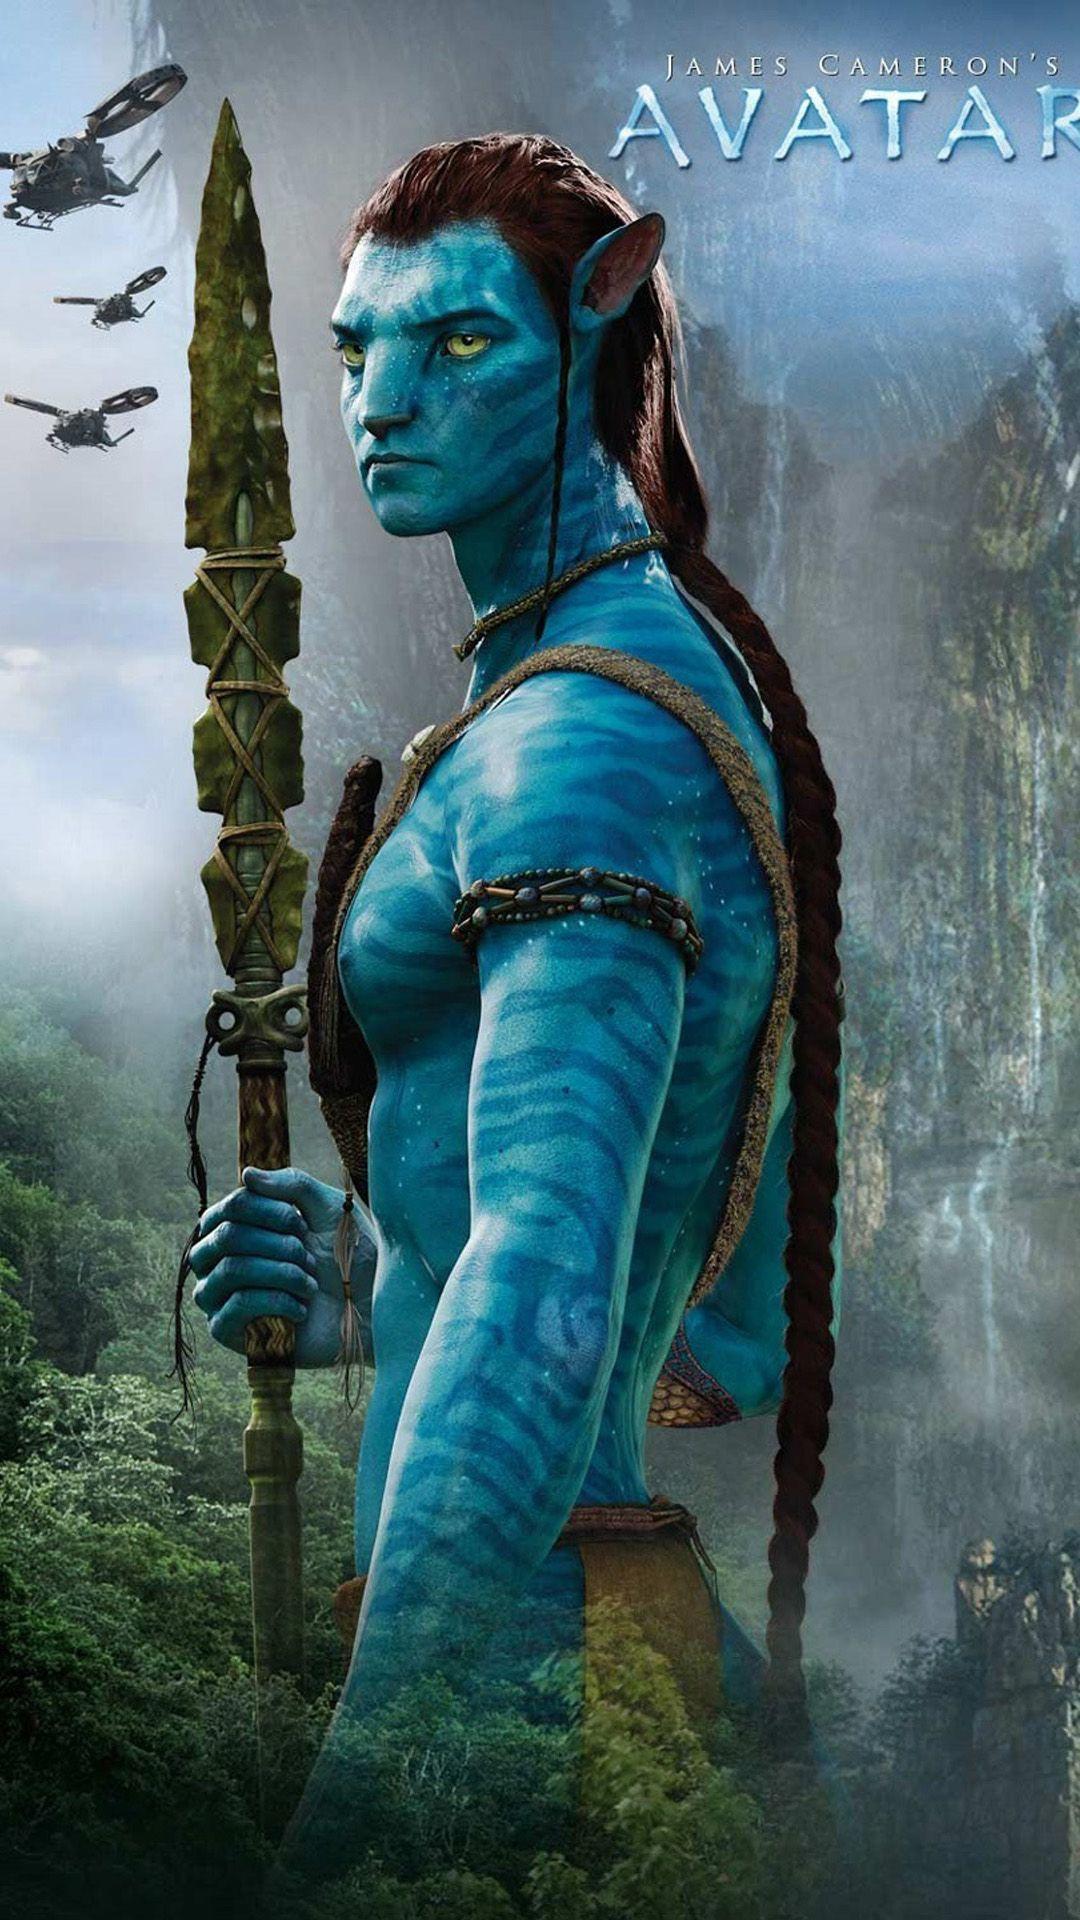 Download123𝘮ovies Avatar 2 The Way of Water 2022 FullMovie Free MP4 720p 1080p HD 4K EngSub  Monhorloger